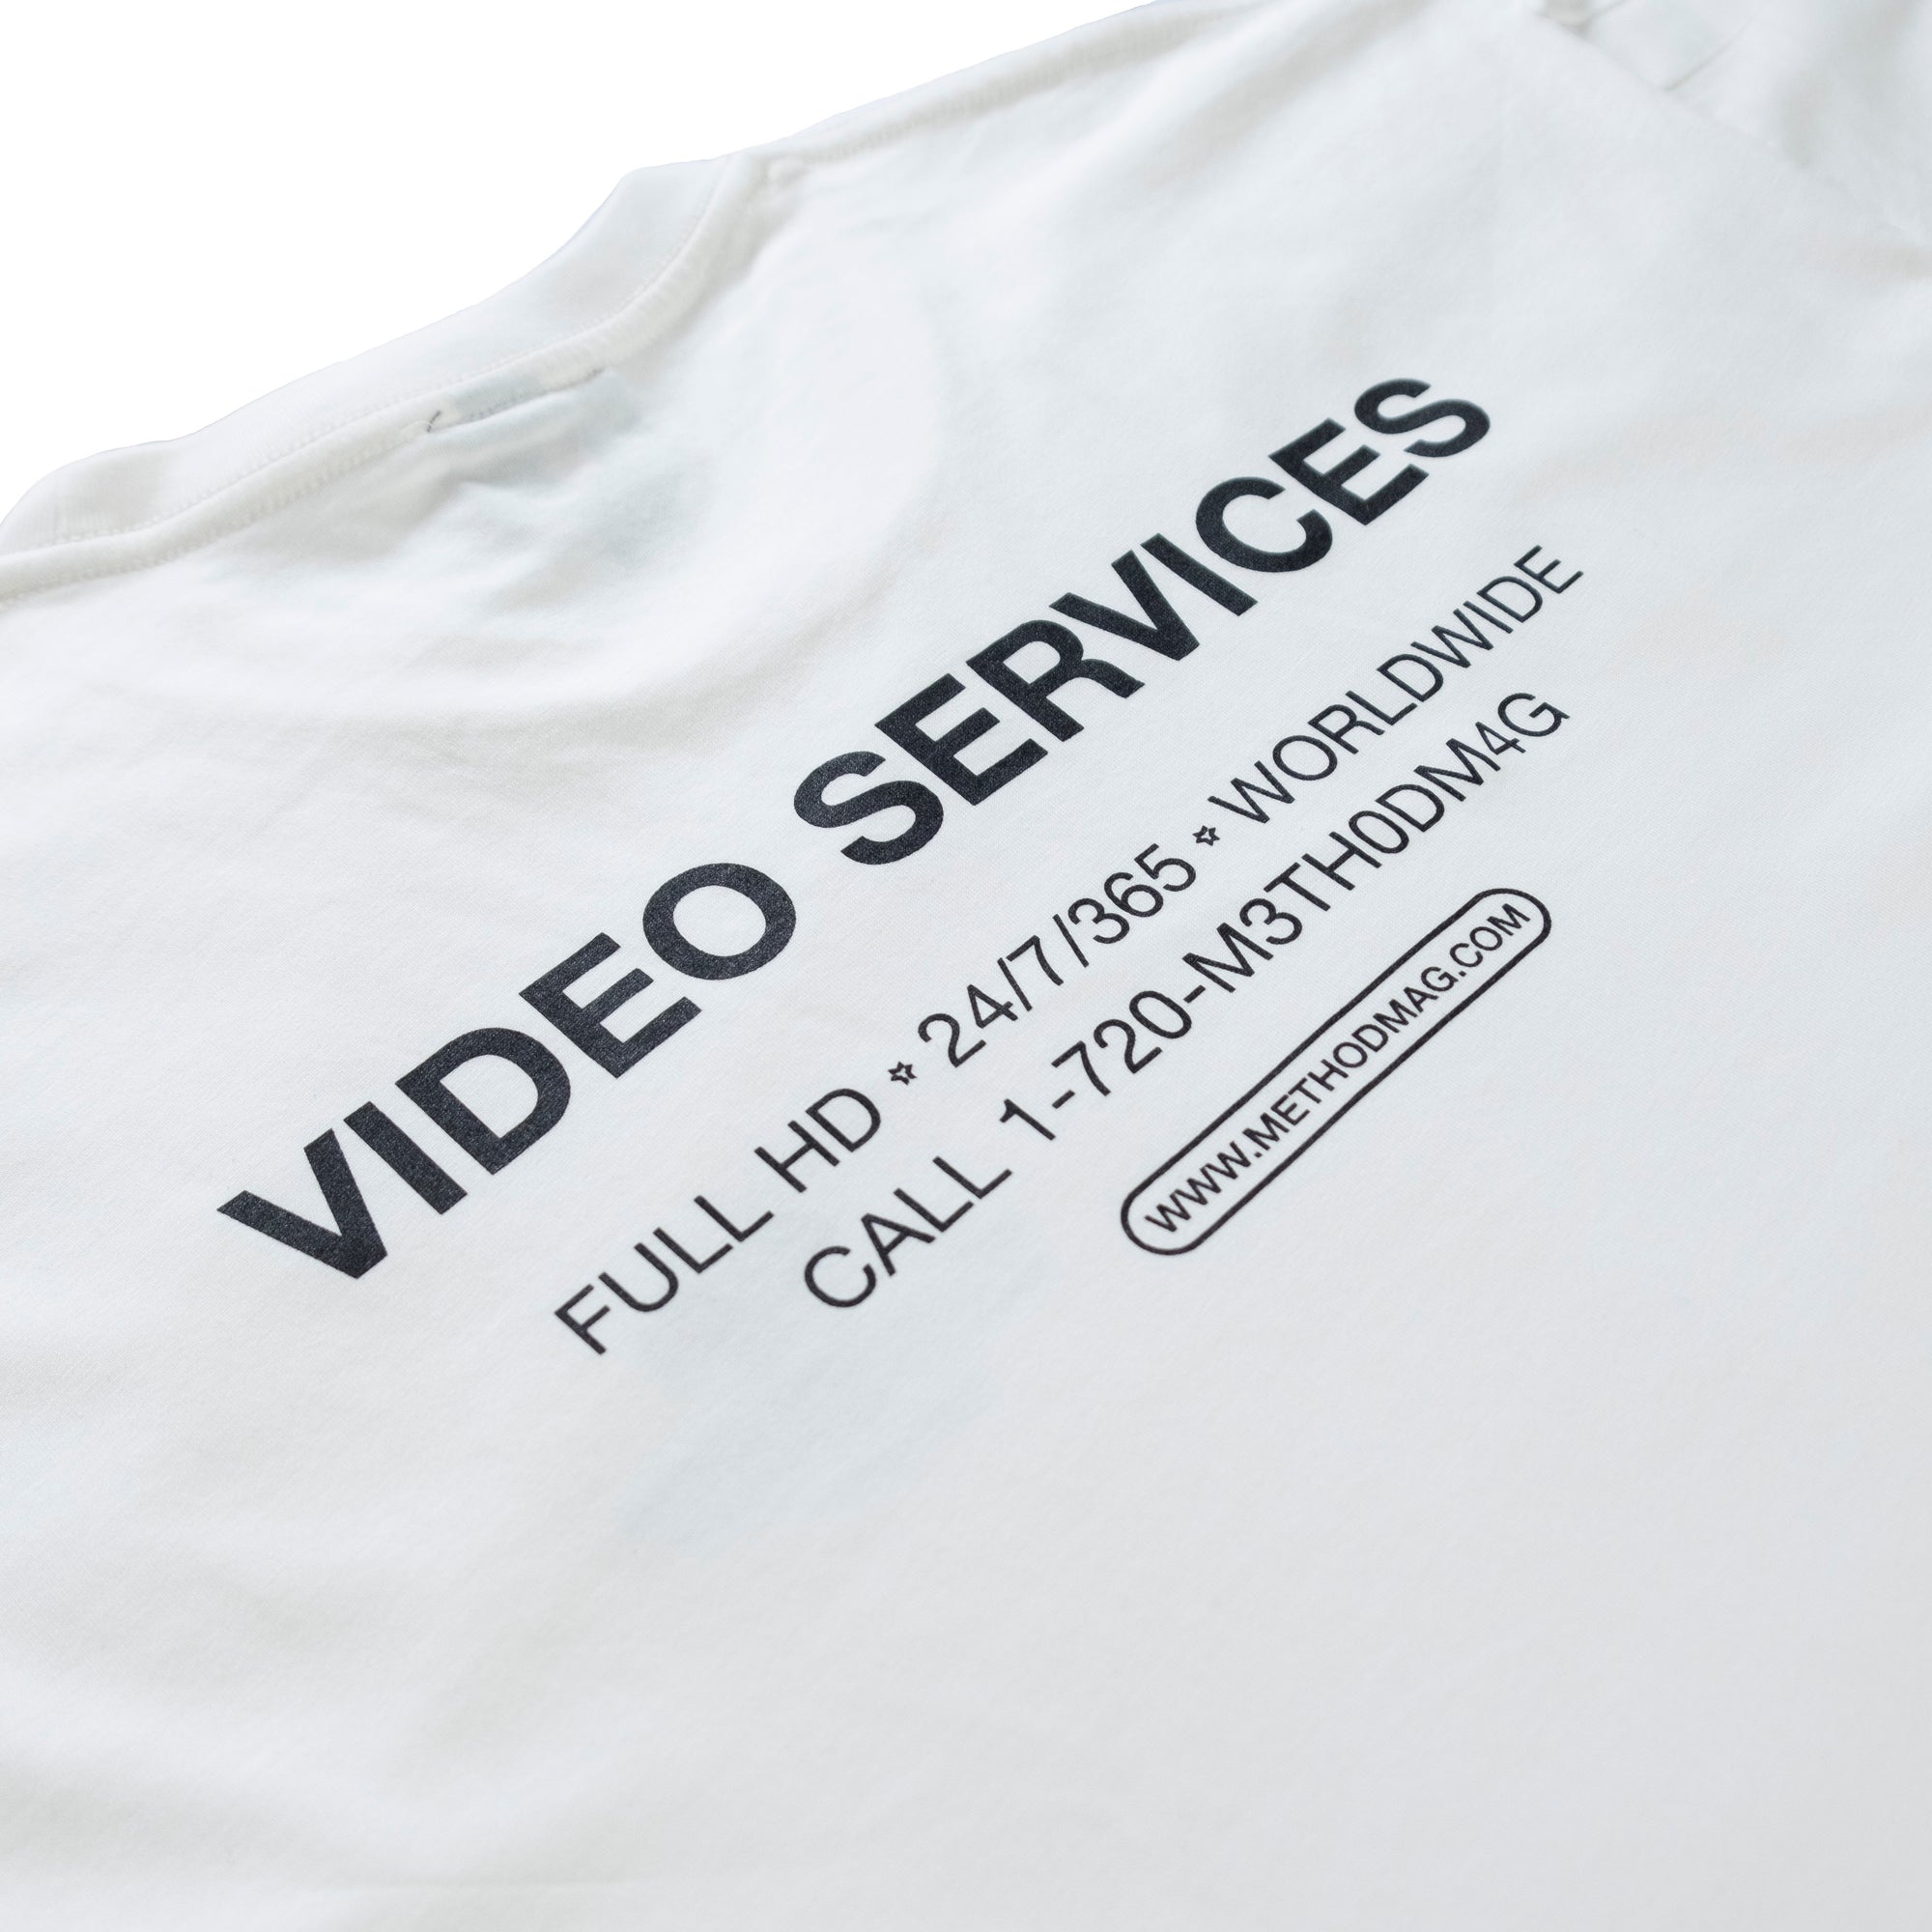 T-shirt Method Video Services - Naturel